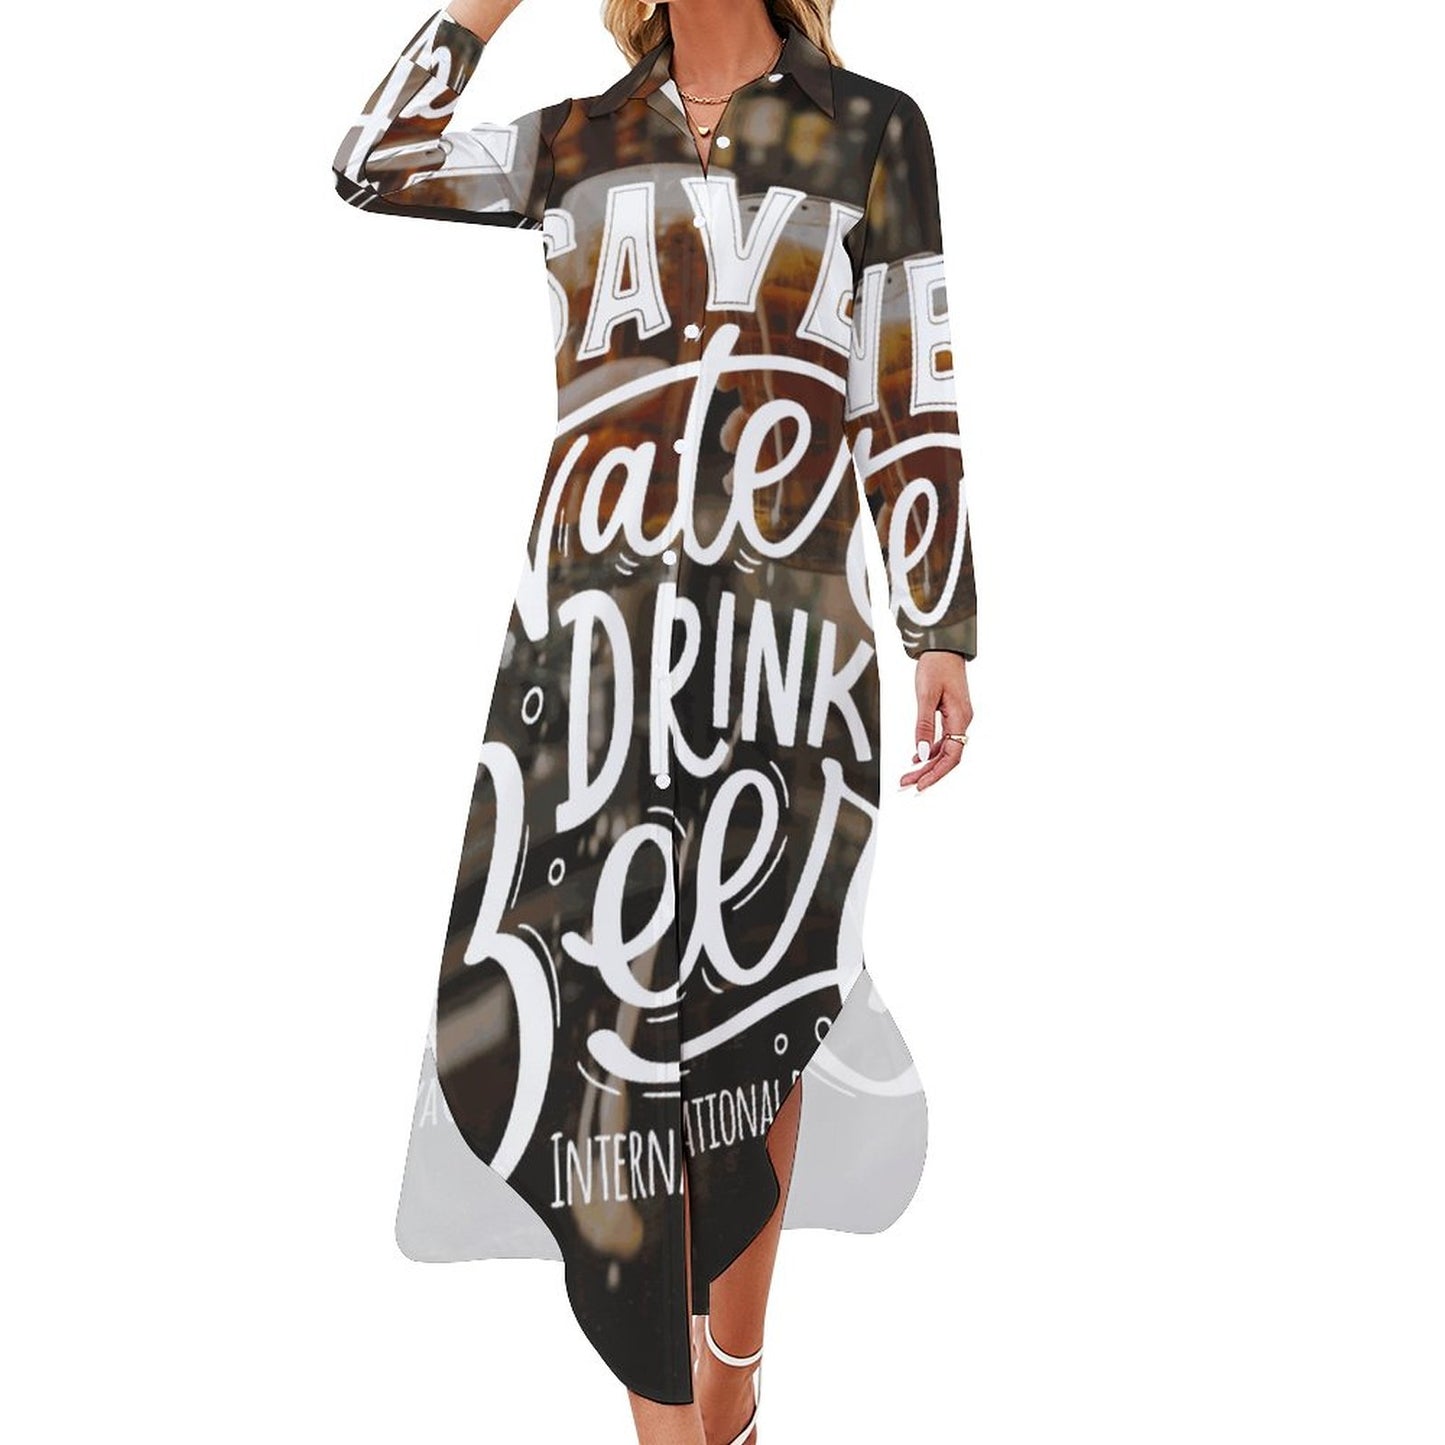 Online Customize Dress for Women Long Sleeved Shirt Dress Save Water Drink Beer